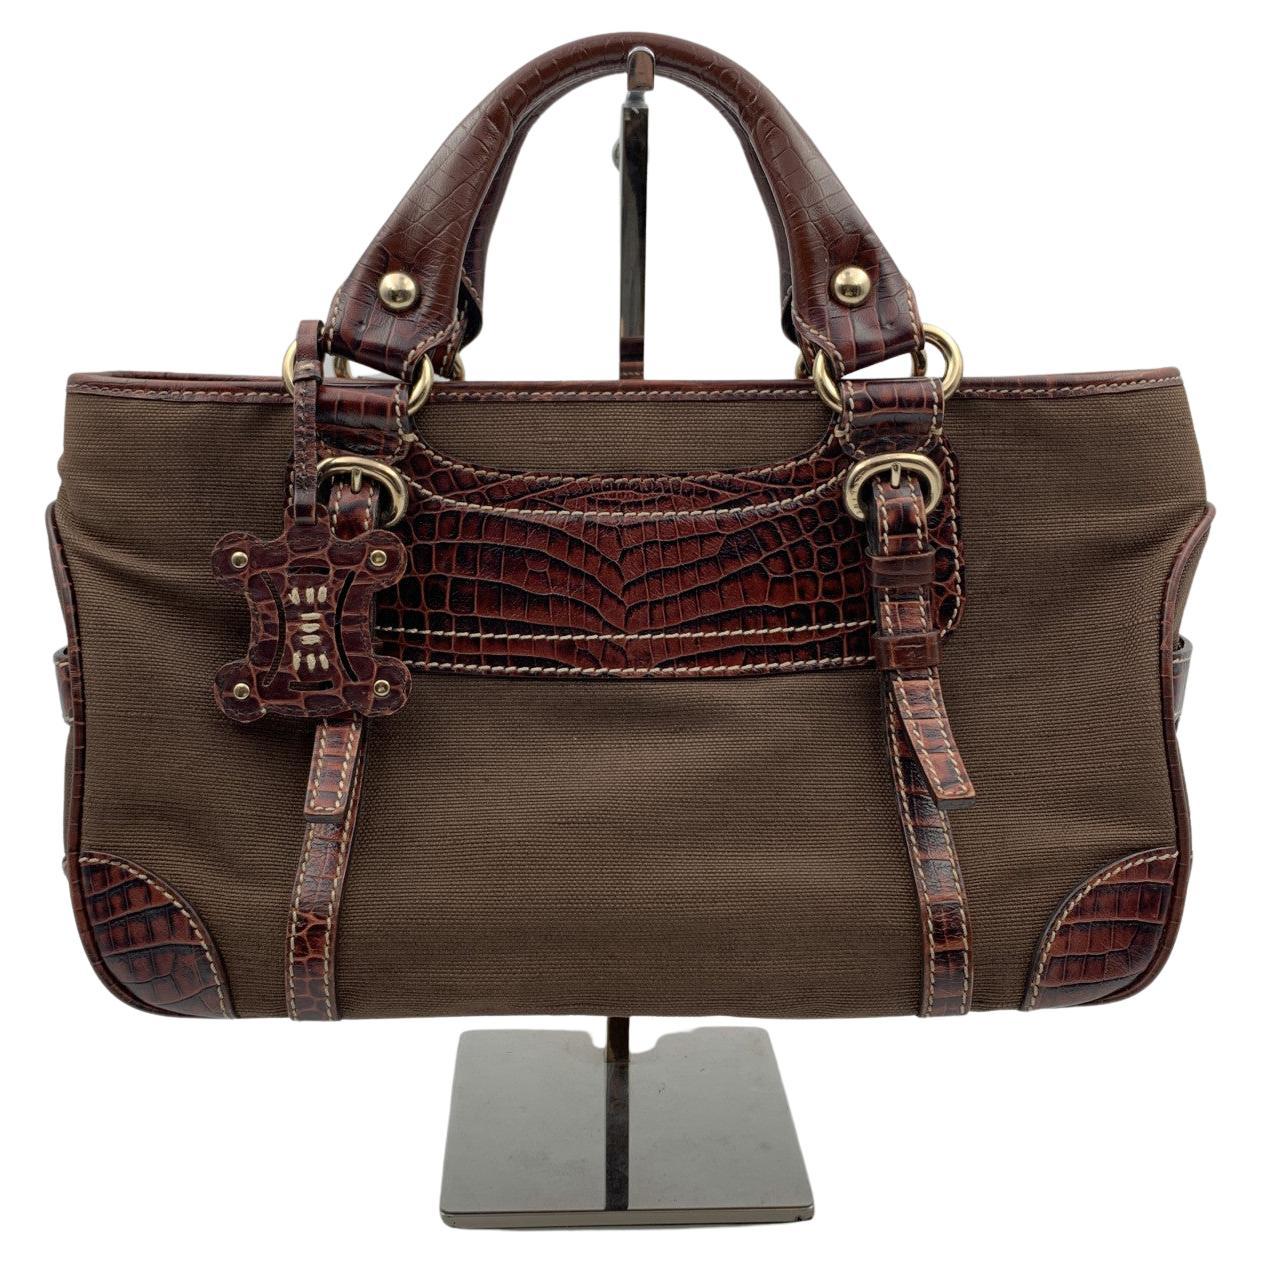 Celine Brown Canvas Leather Boogie Satchel Tote Bag Handbag